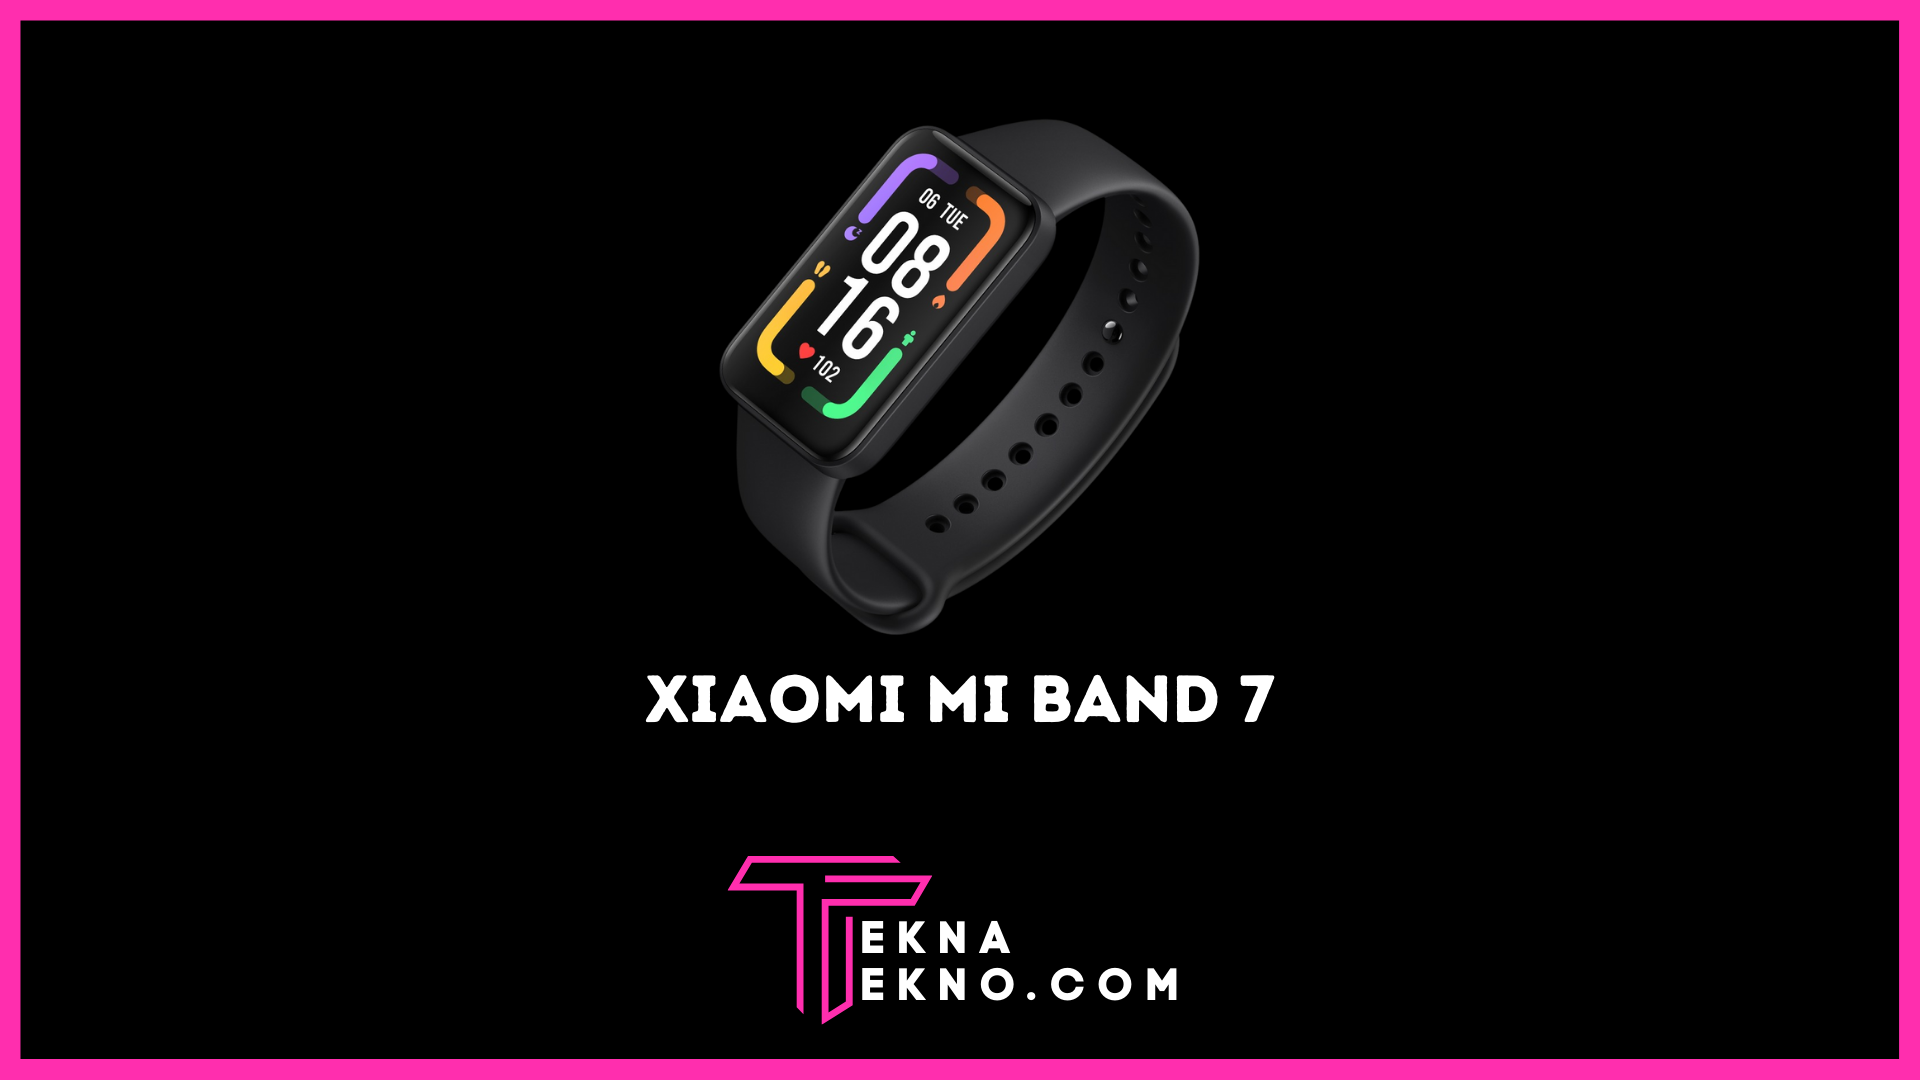 Xiaomi Mi Band 7, Smartwatch dengan Layar AOD